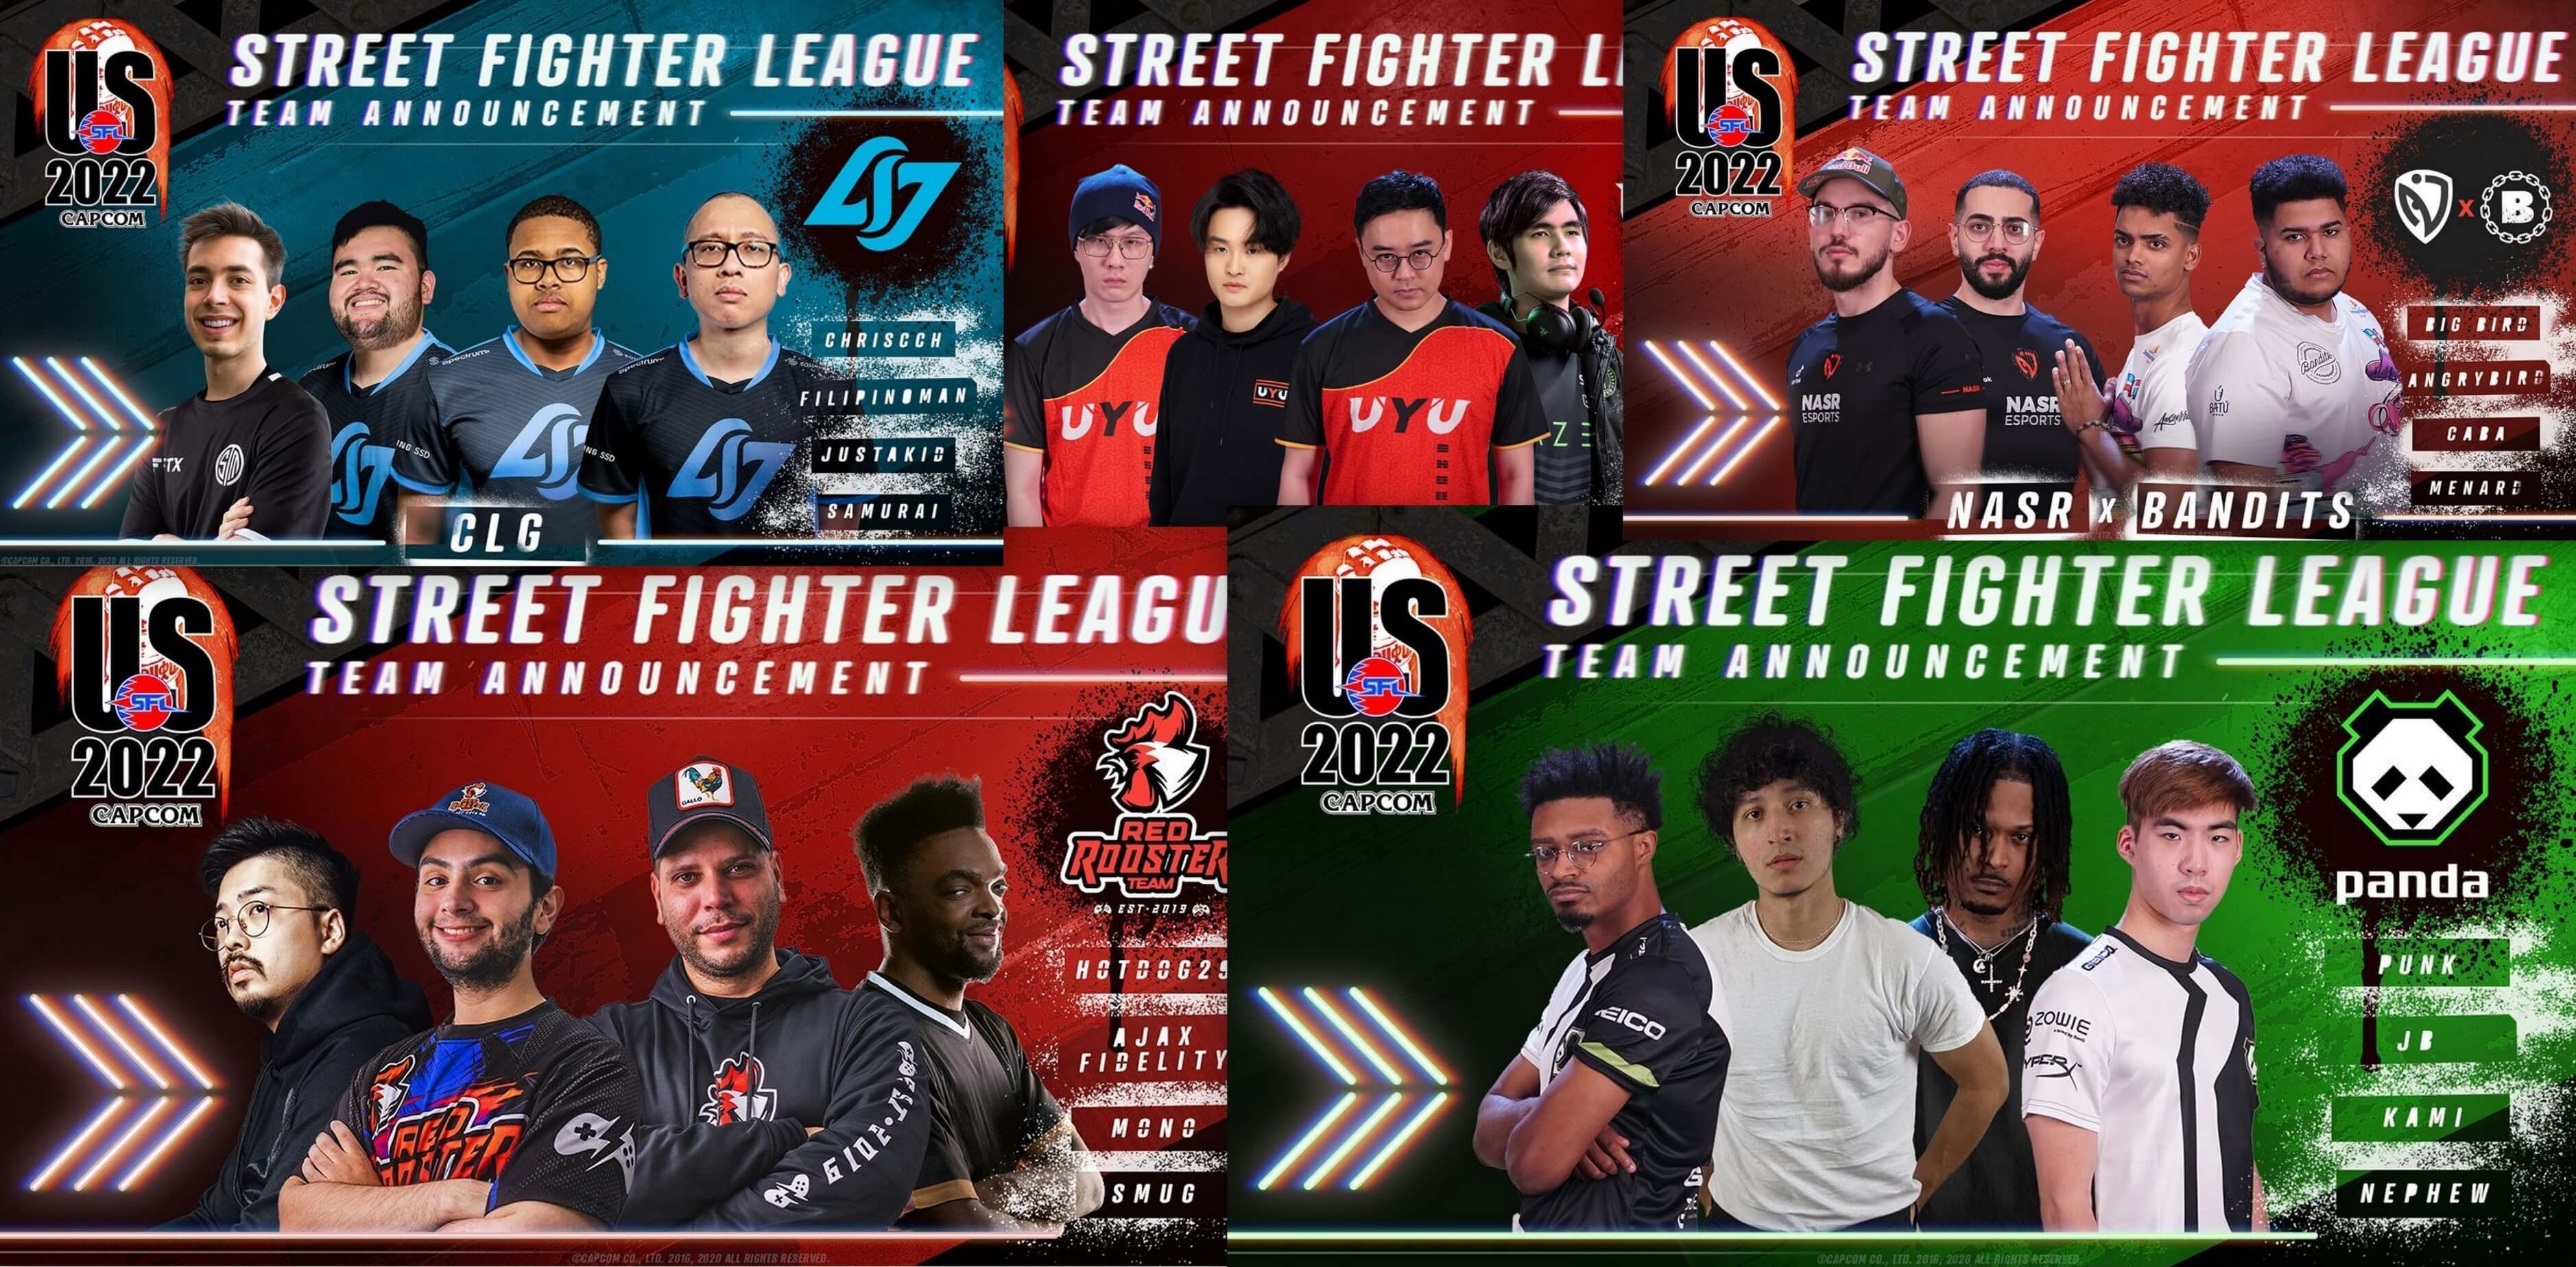 Street Fighter League US: All the Team Announcements So Far